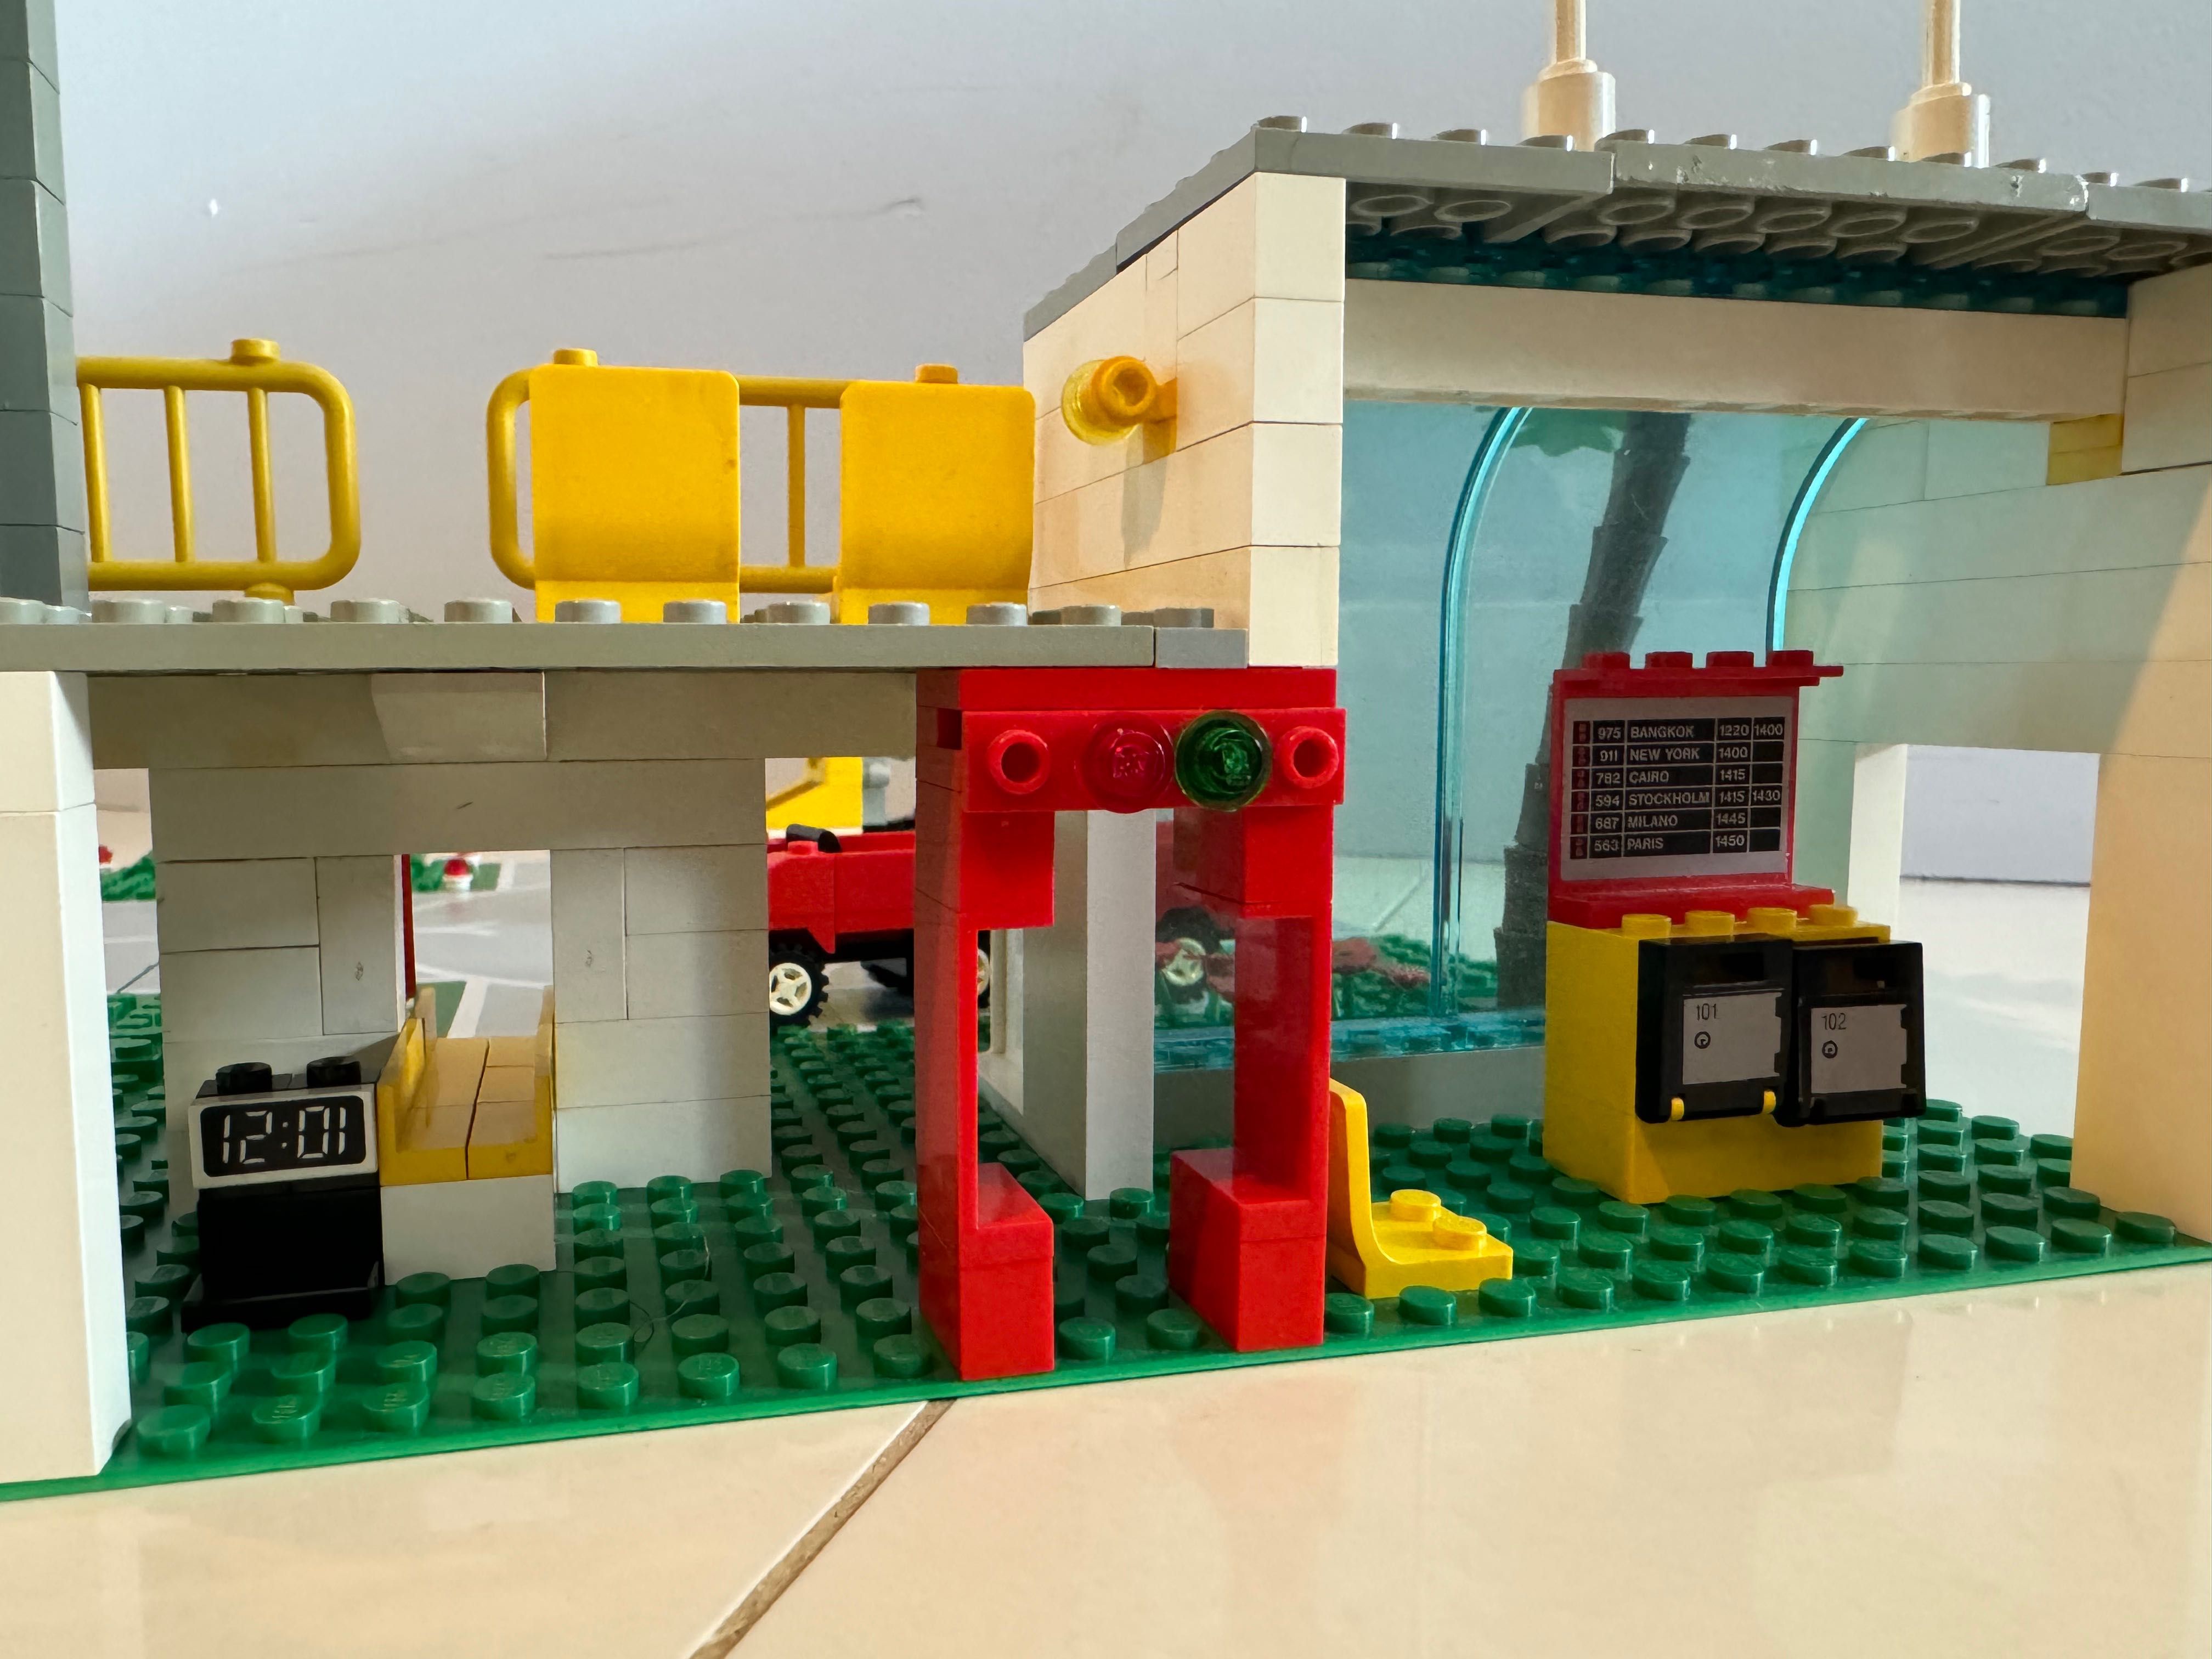 LEGO classic town; zestaw 6396 International Jetport komplet + instr